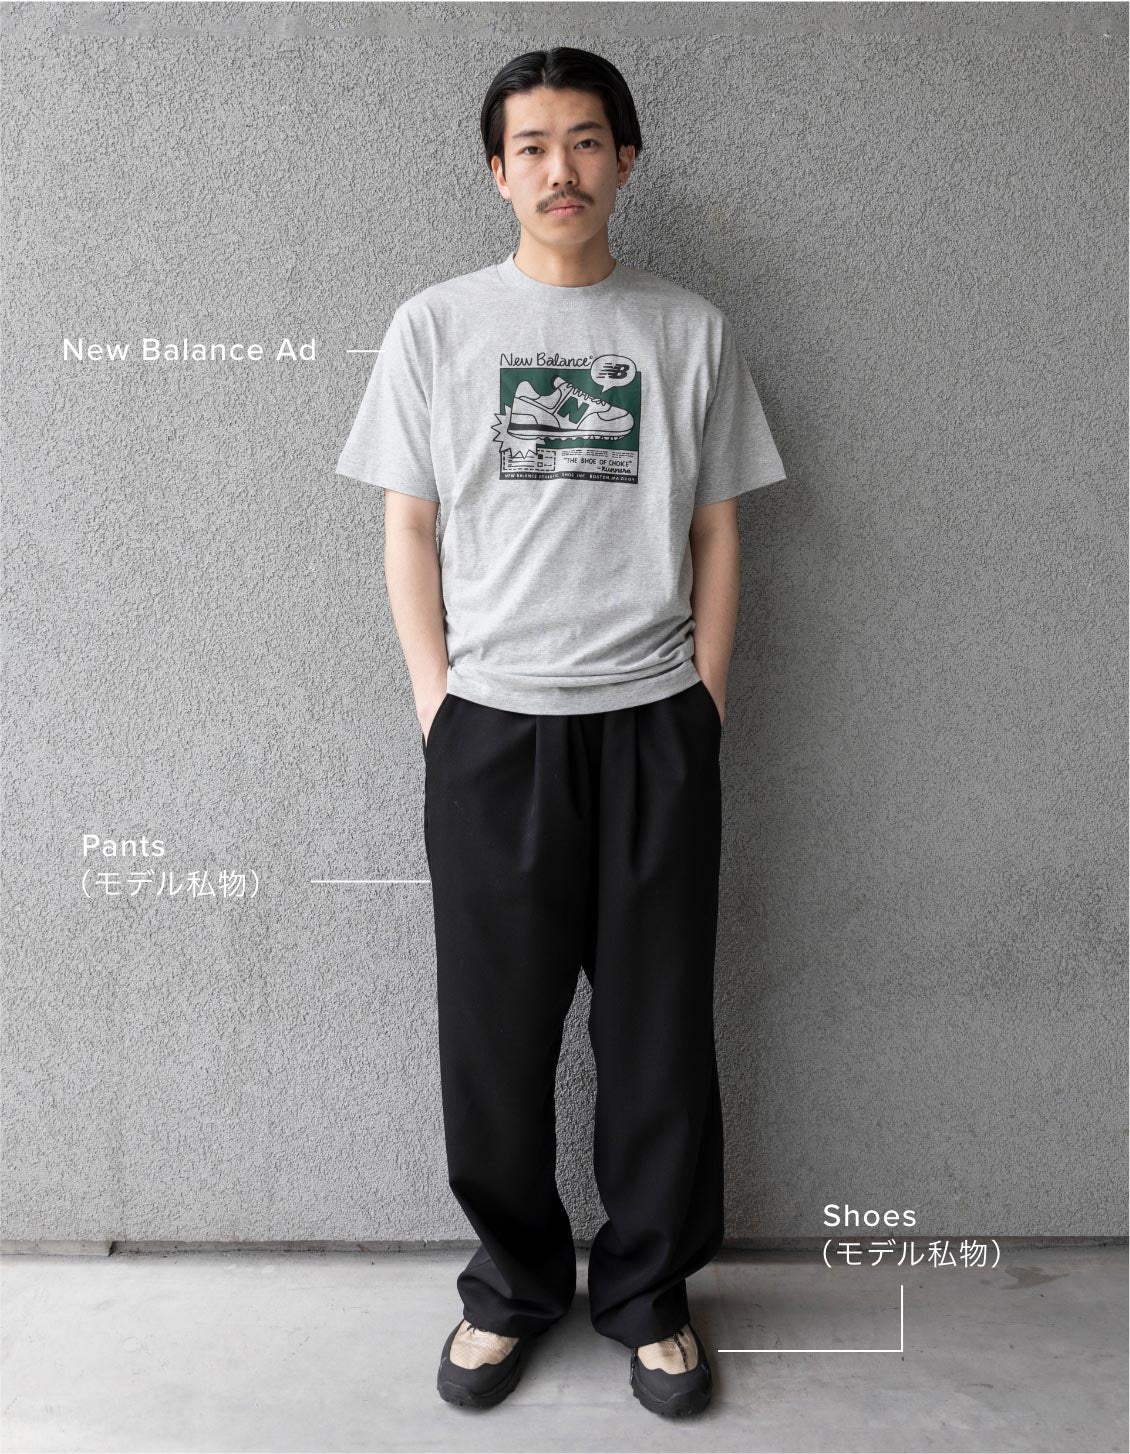 Ryo Ishikawa搭配详情T恤:New Balance Ad, Pants:模特个人物品，Shoes:模特个人物品